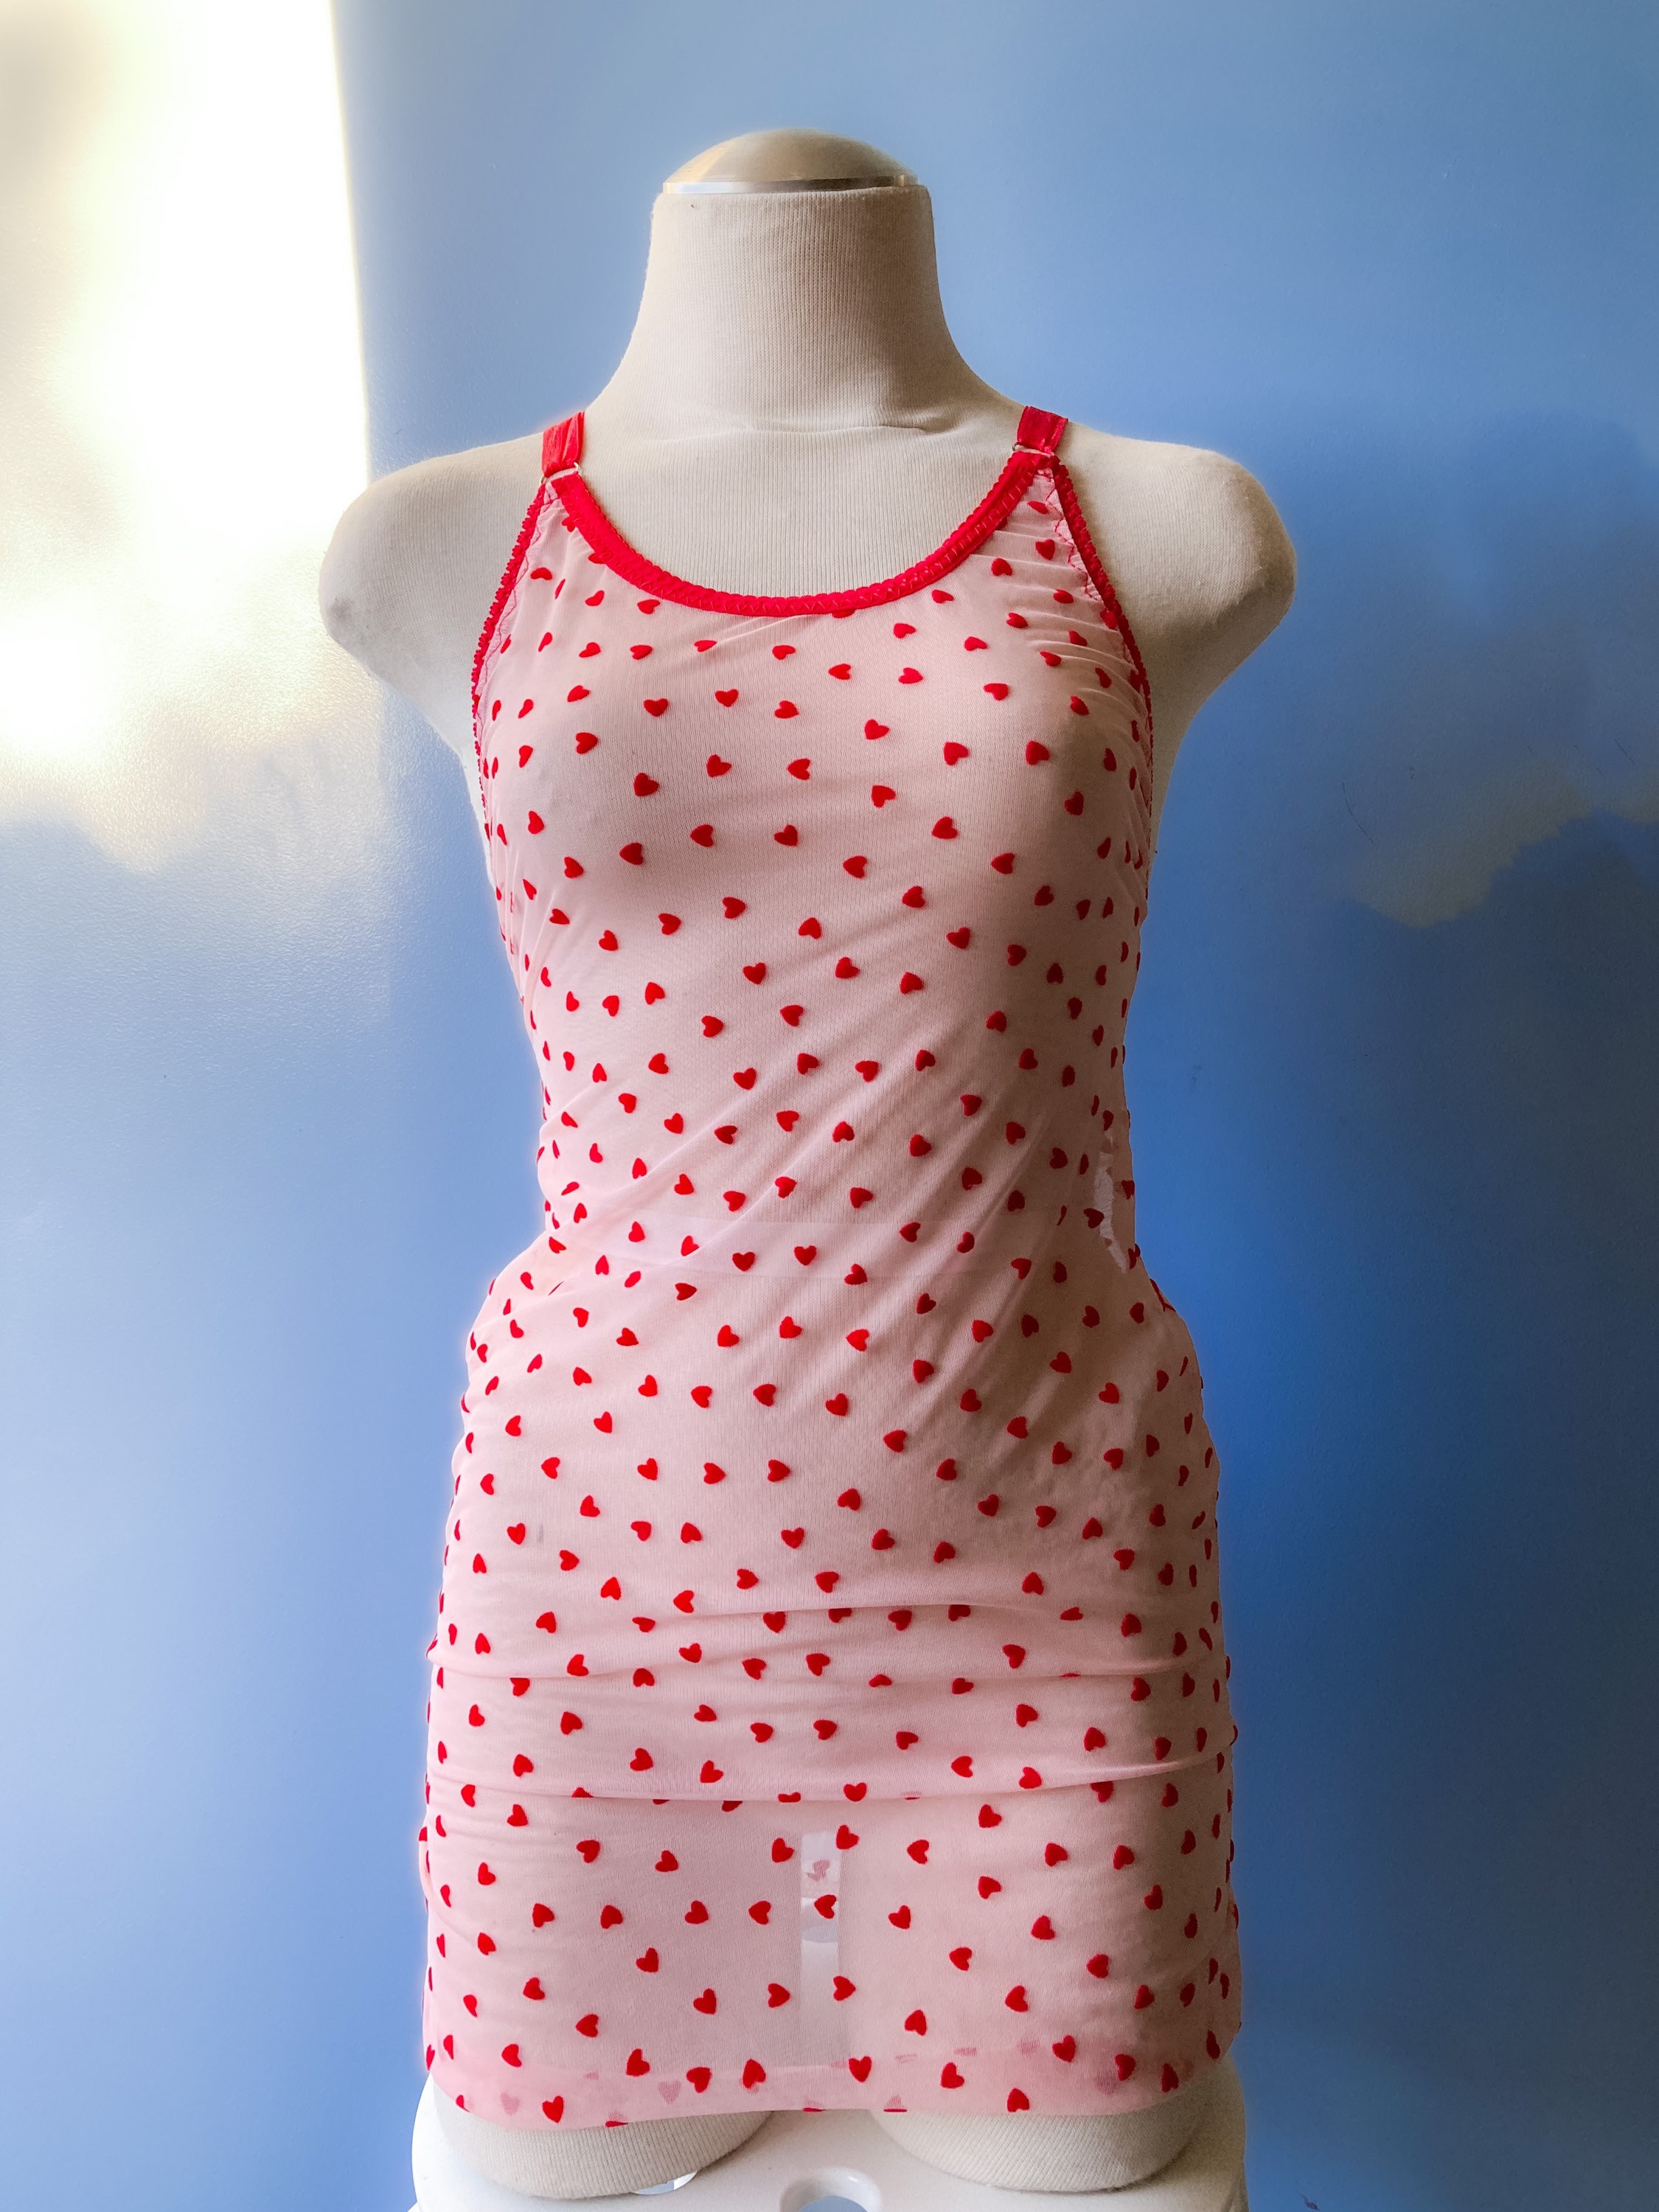 Red heart on pink mesh mini slip dress size xs/s